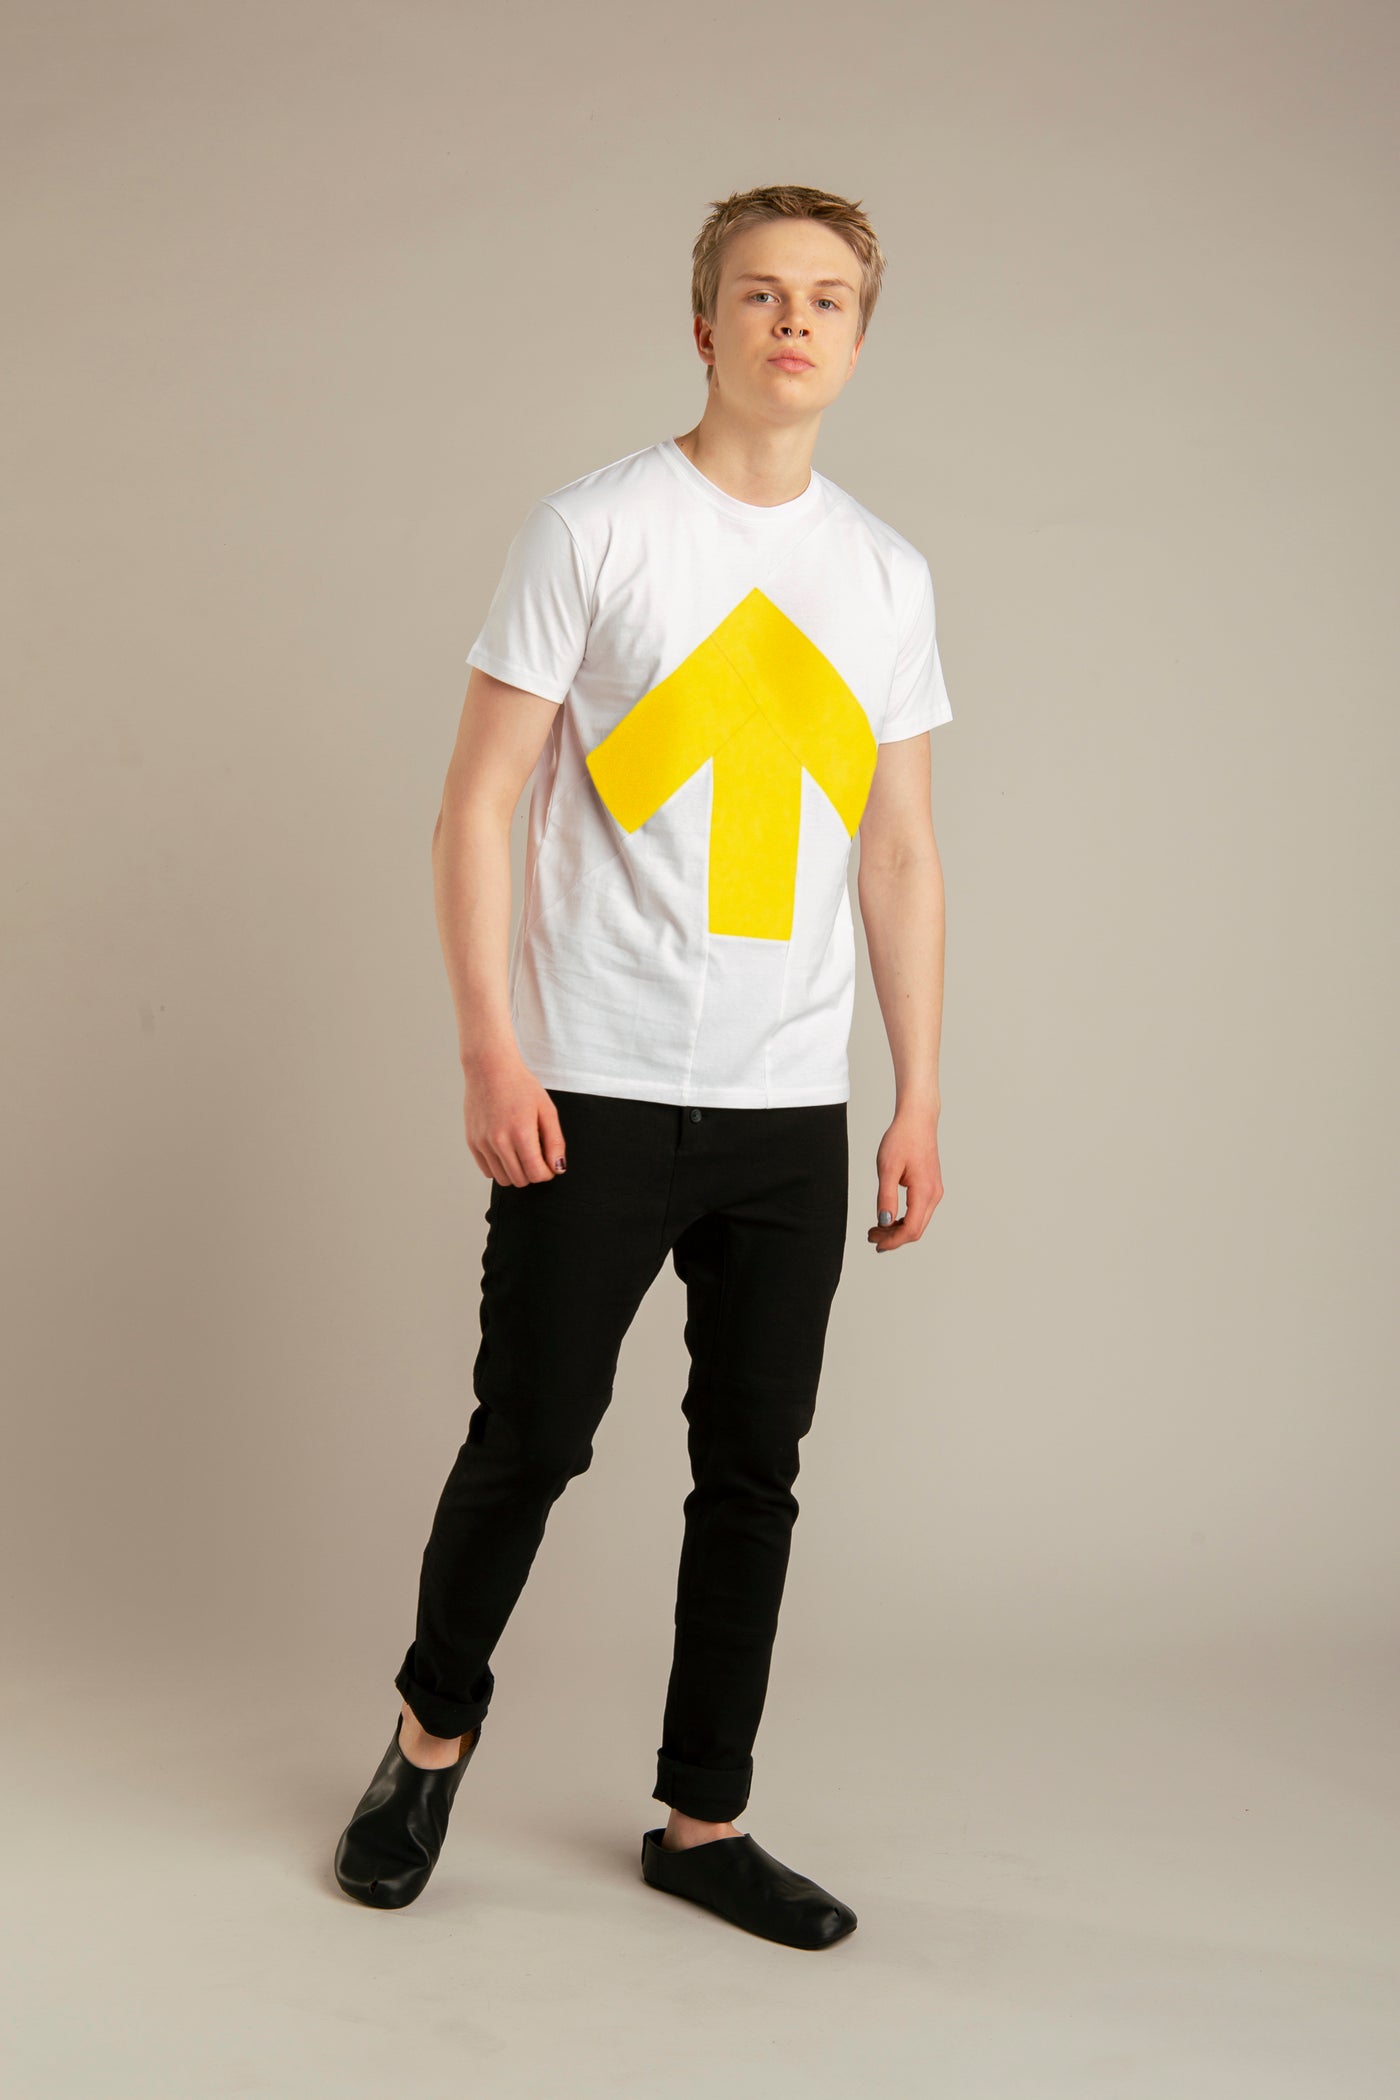 Up-shirt for men | White, yellow